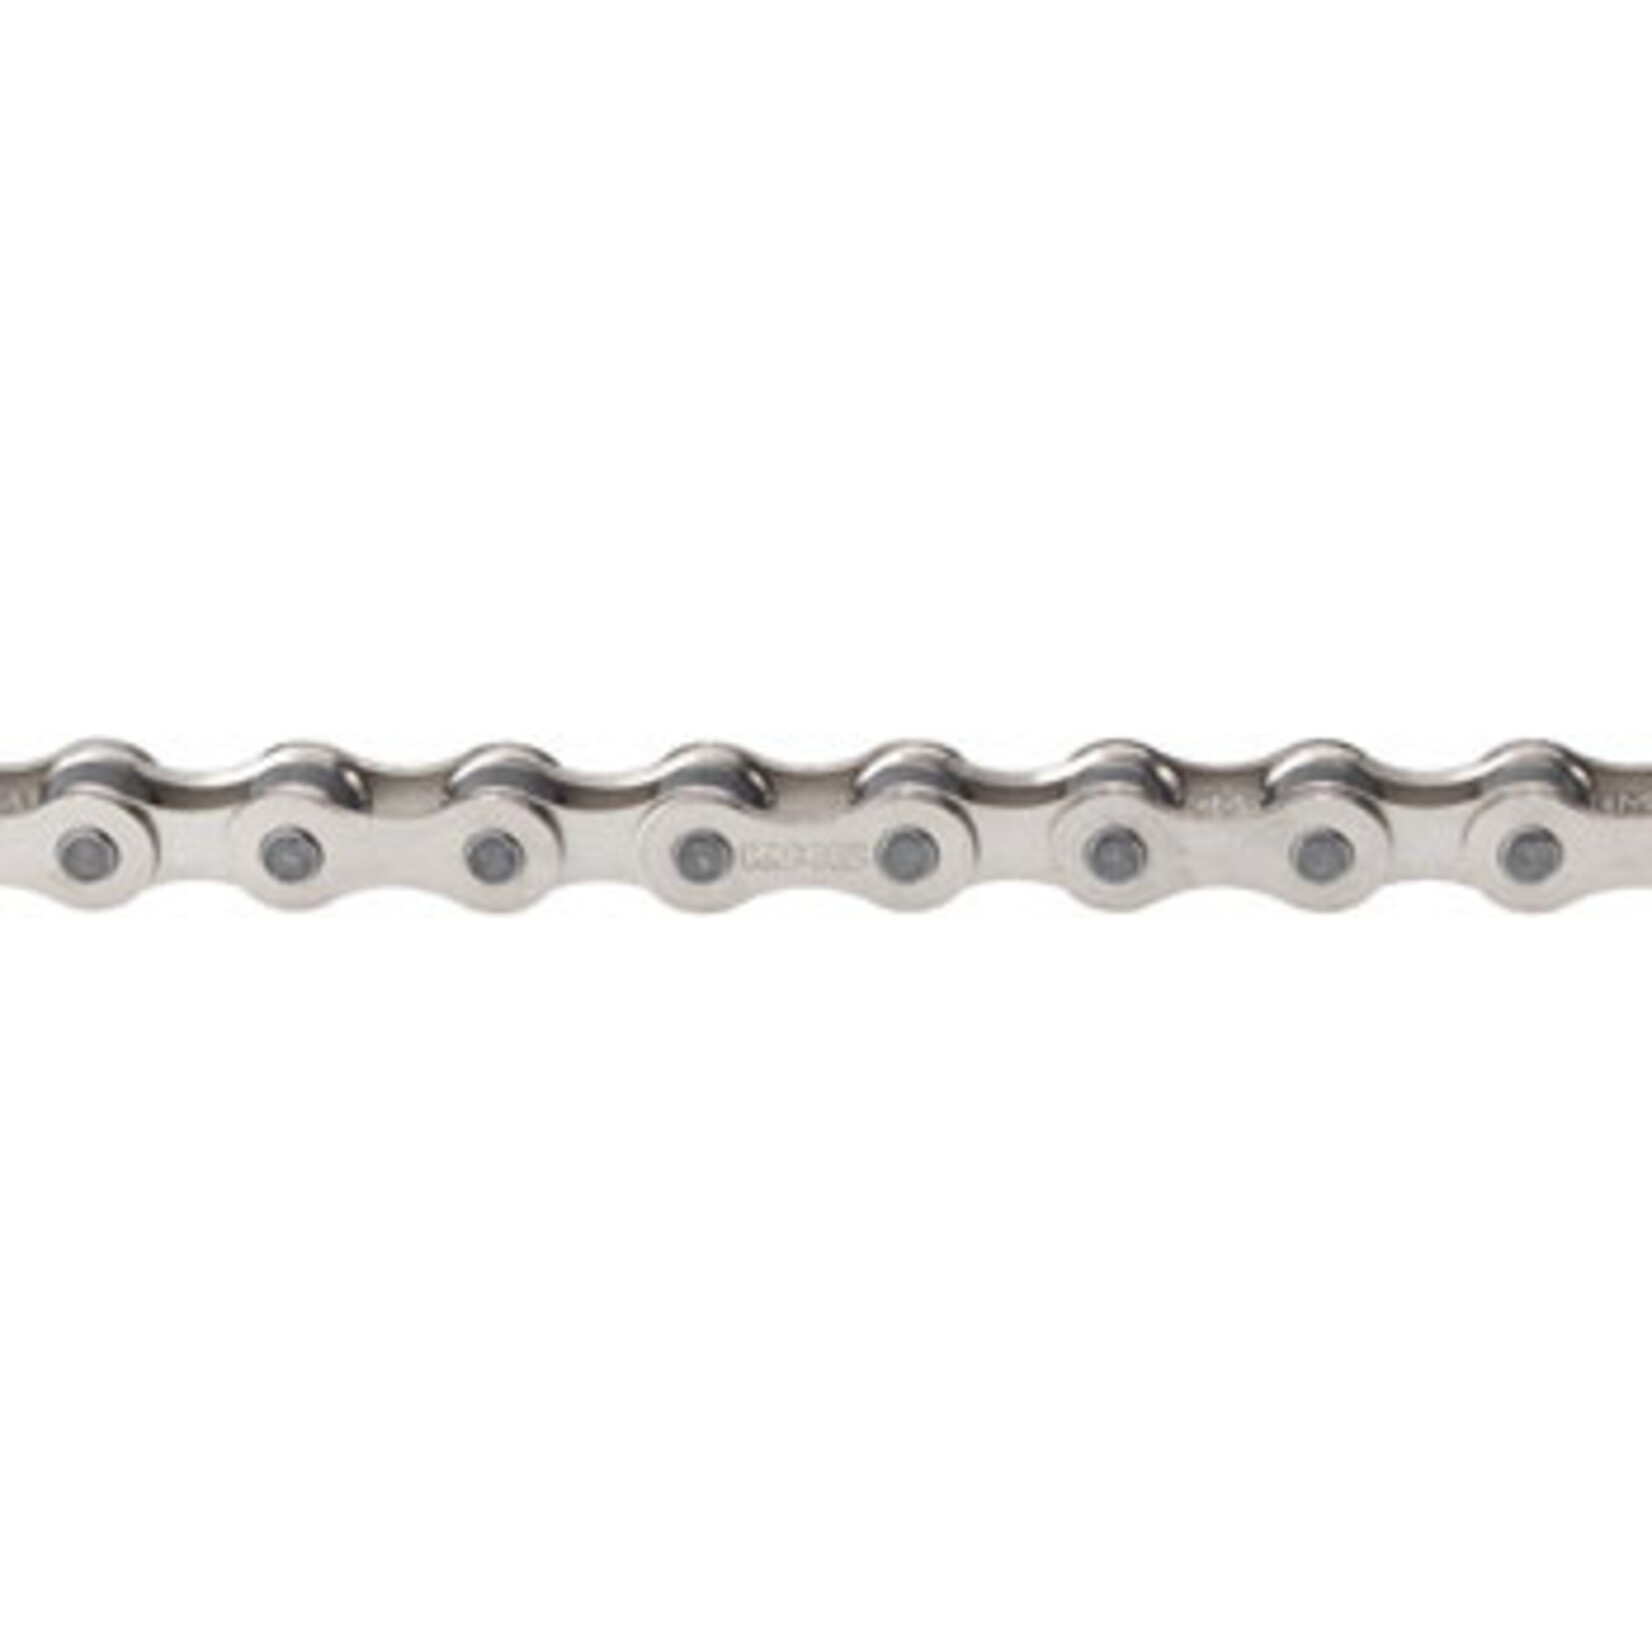 KMC S1 Chain - Single Speed 1/2" x 1/8", 112 Links, Silver